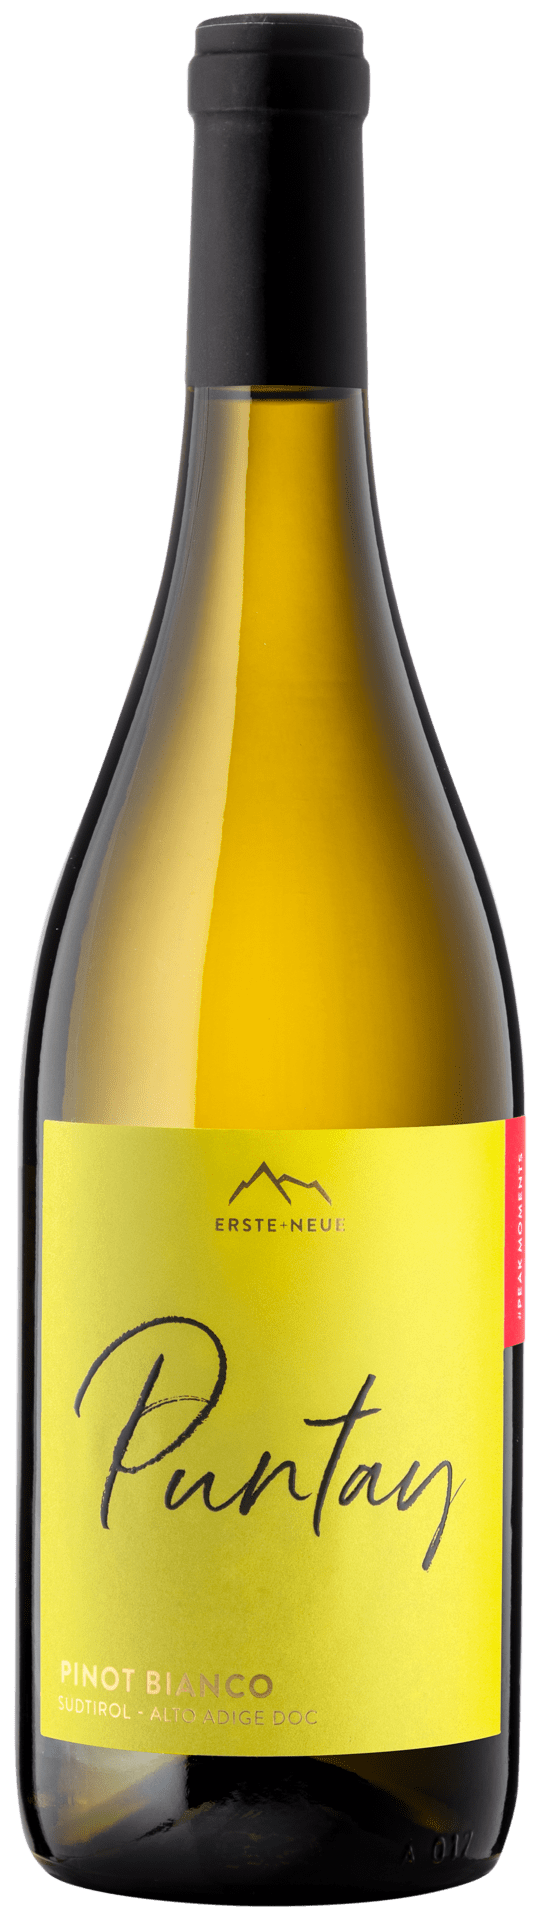 Erste + Neue Puntay Pinot Bianco DOC, Südtirol - Alto Adige - StillWine GmbH